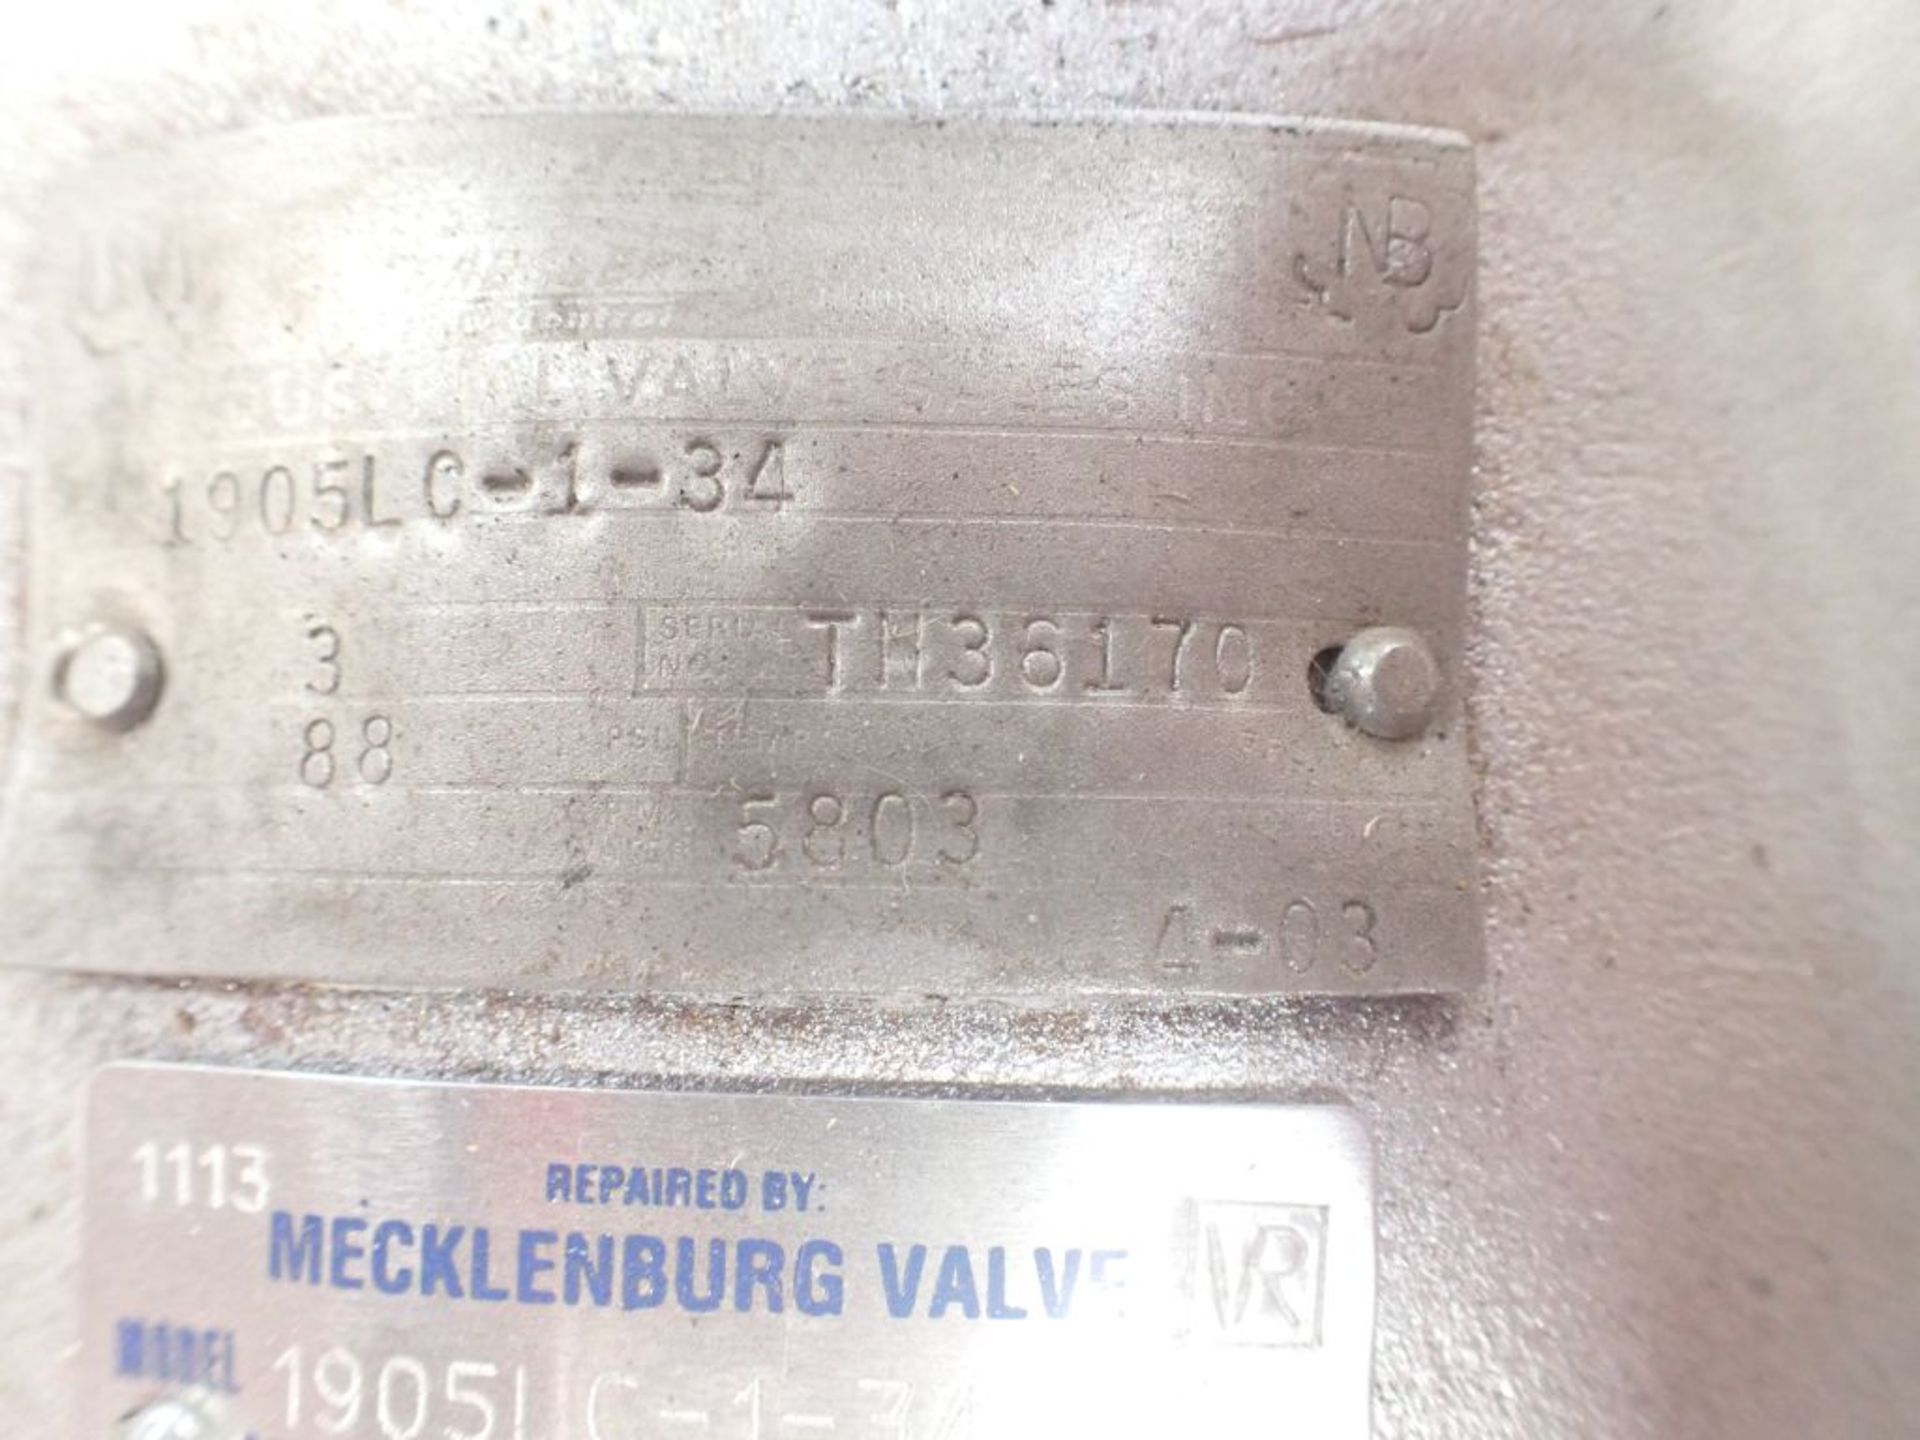 UV Valve - Model No. 1905LC-1-34; Serial No. TN361 70; Tag: 215687 - Image 6 of 7